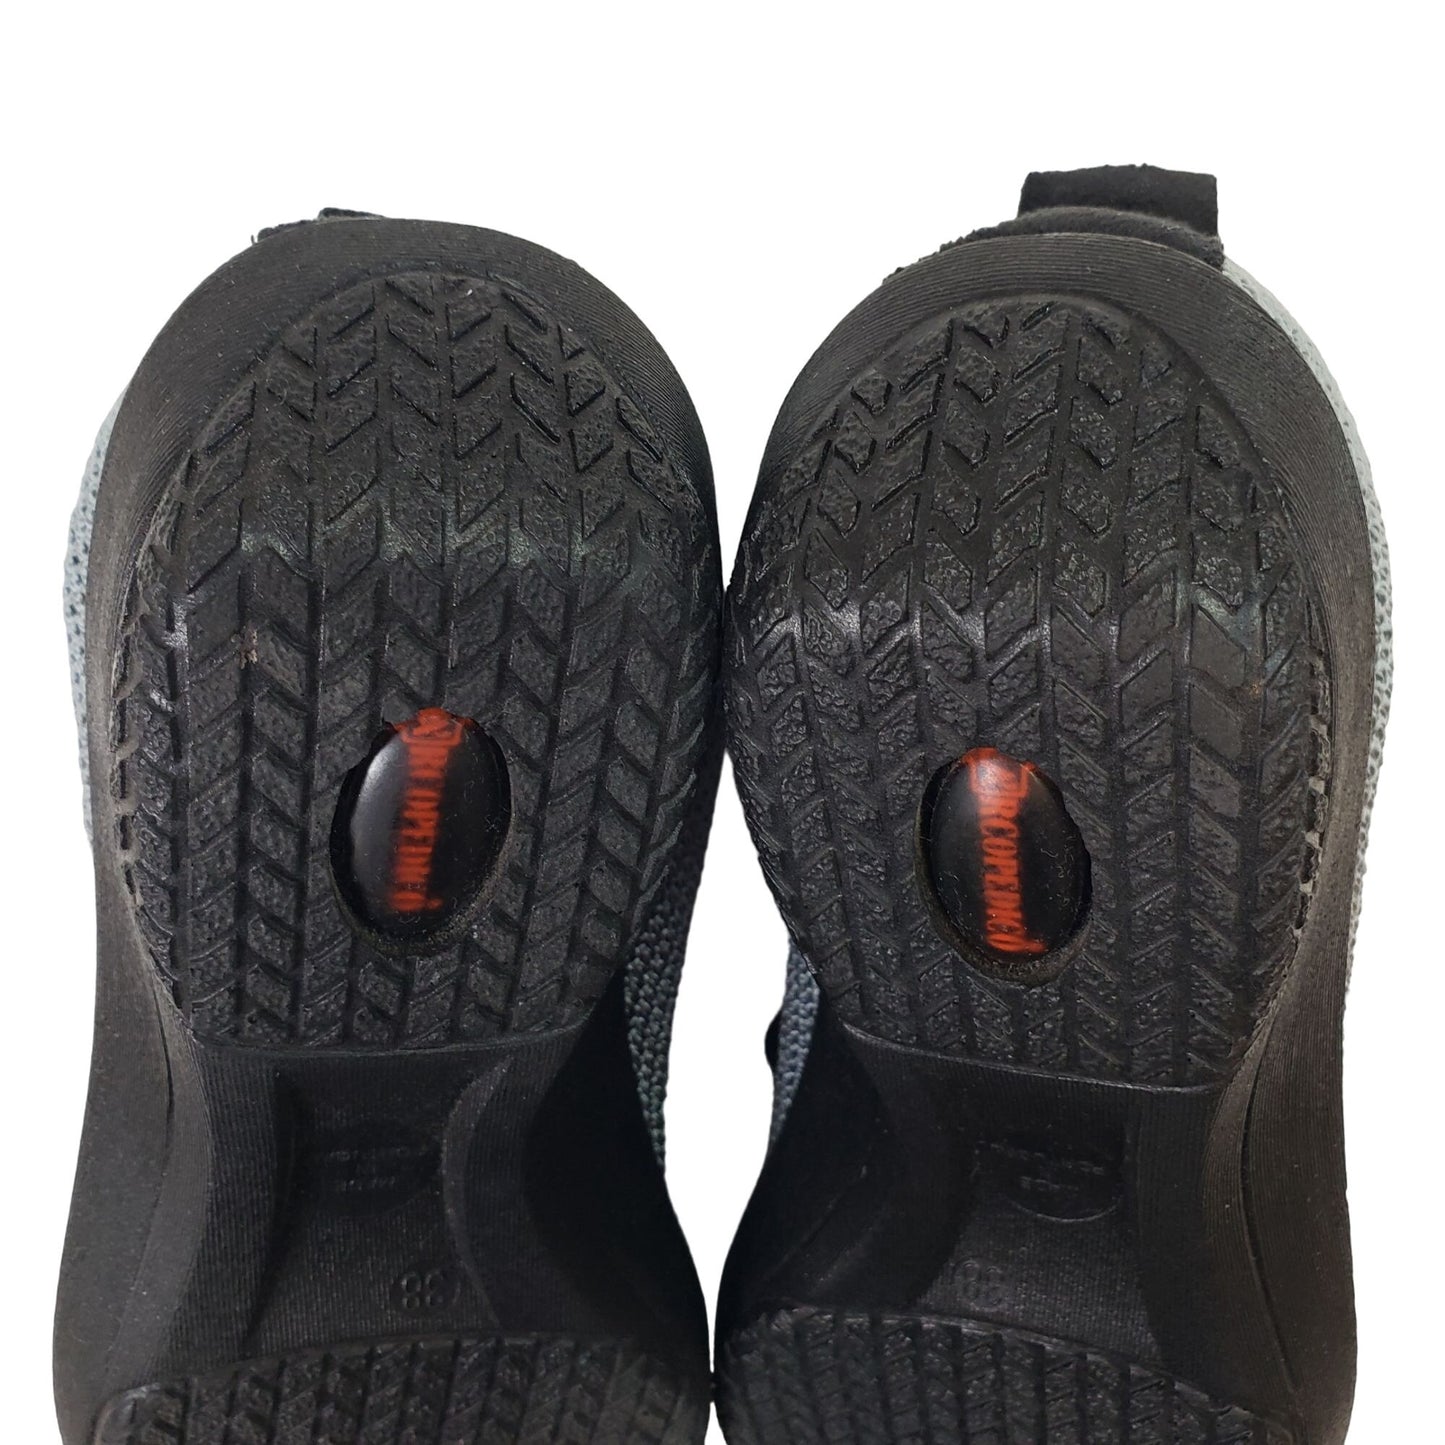 NWOT/NWOB A'rcopedico Knit Comfort Sneakers Size EU 38/US 7-7.5